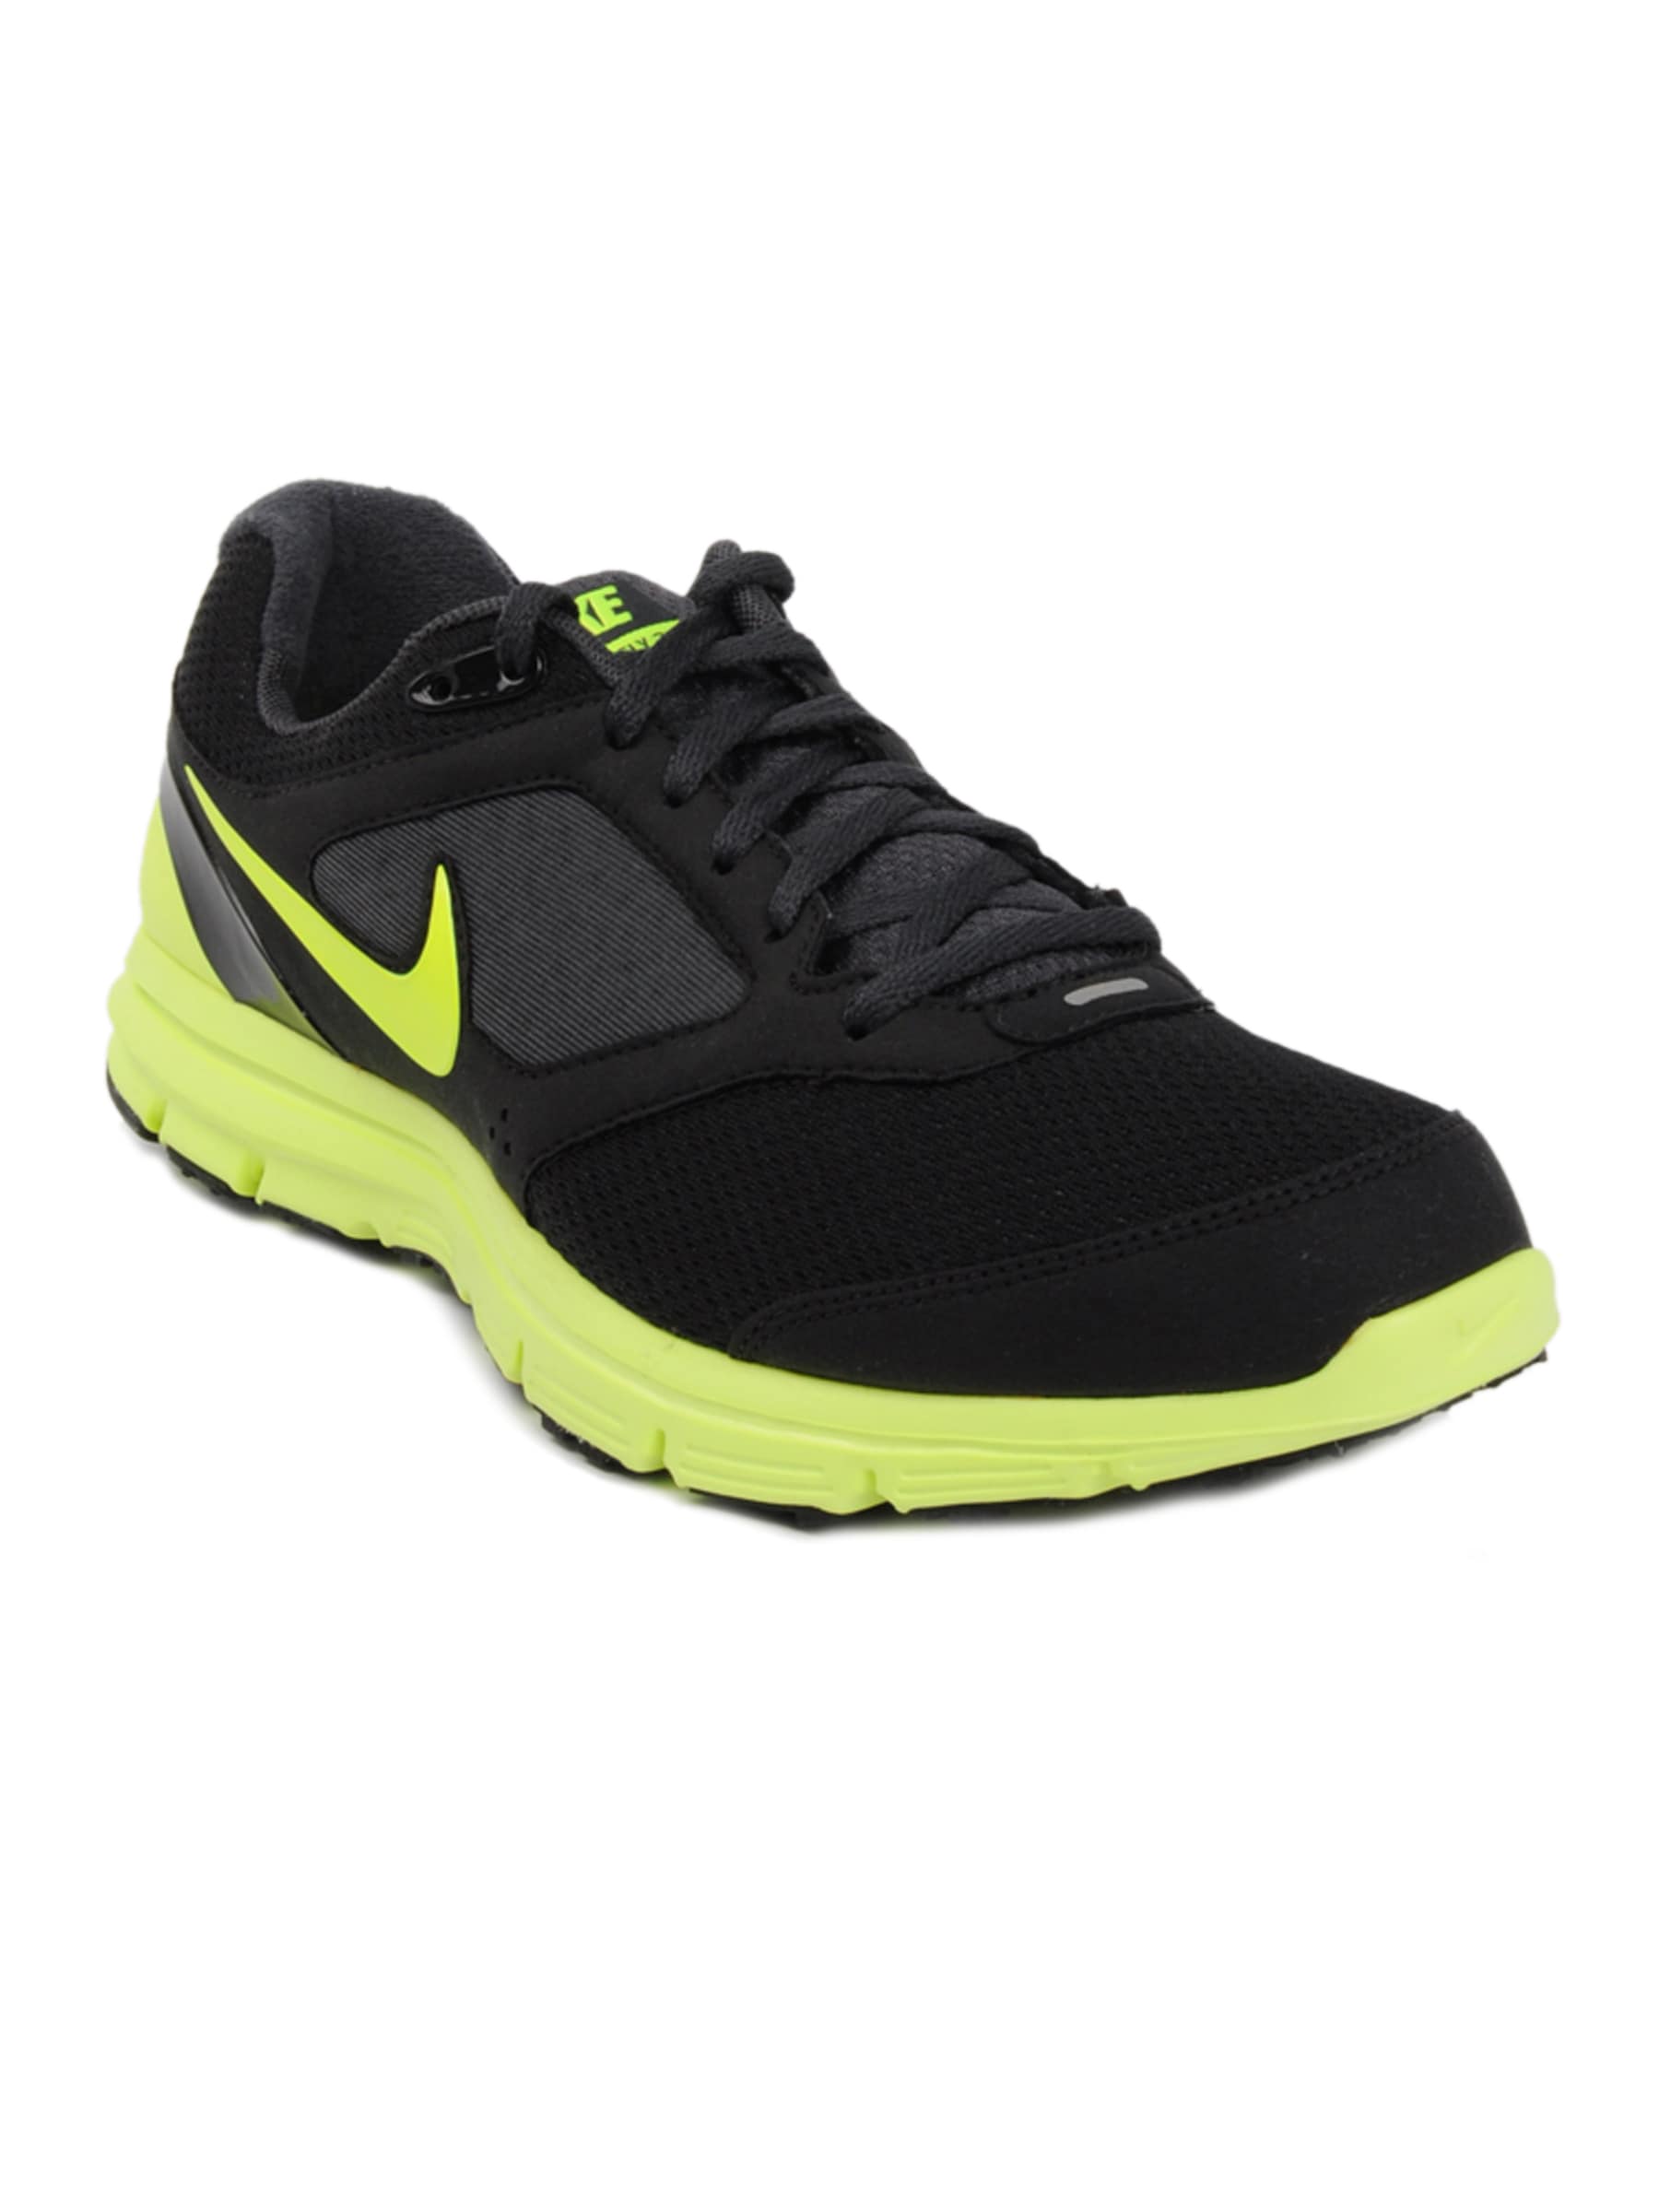 Nike Men Lunarfly Black Sports Shoes